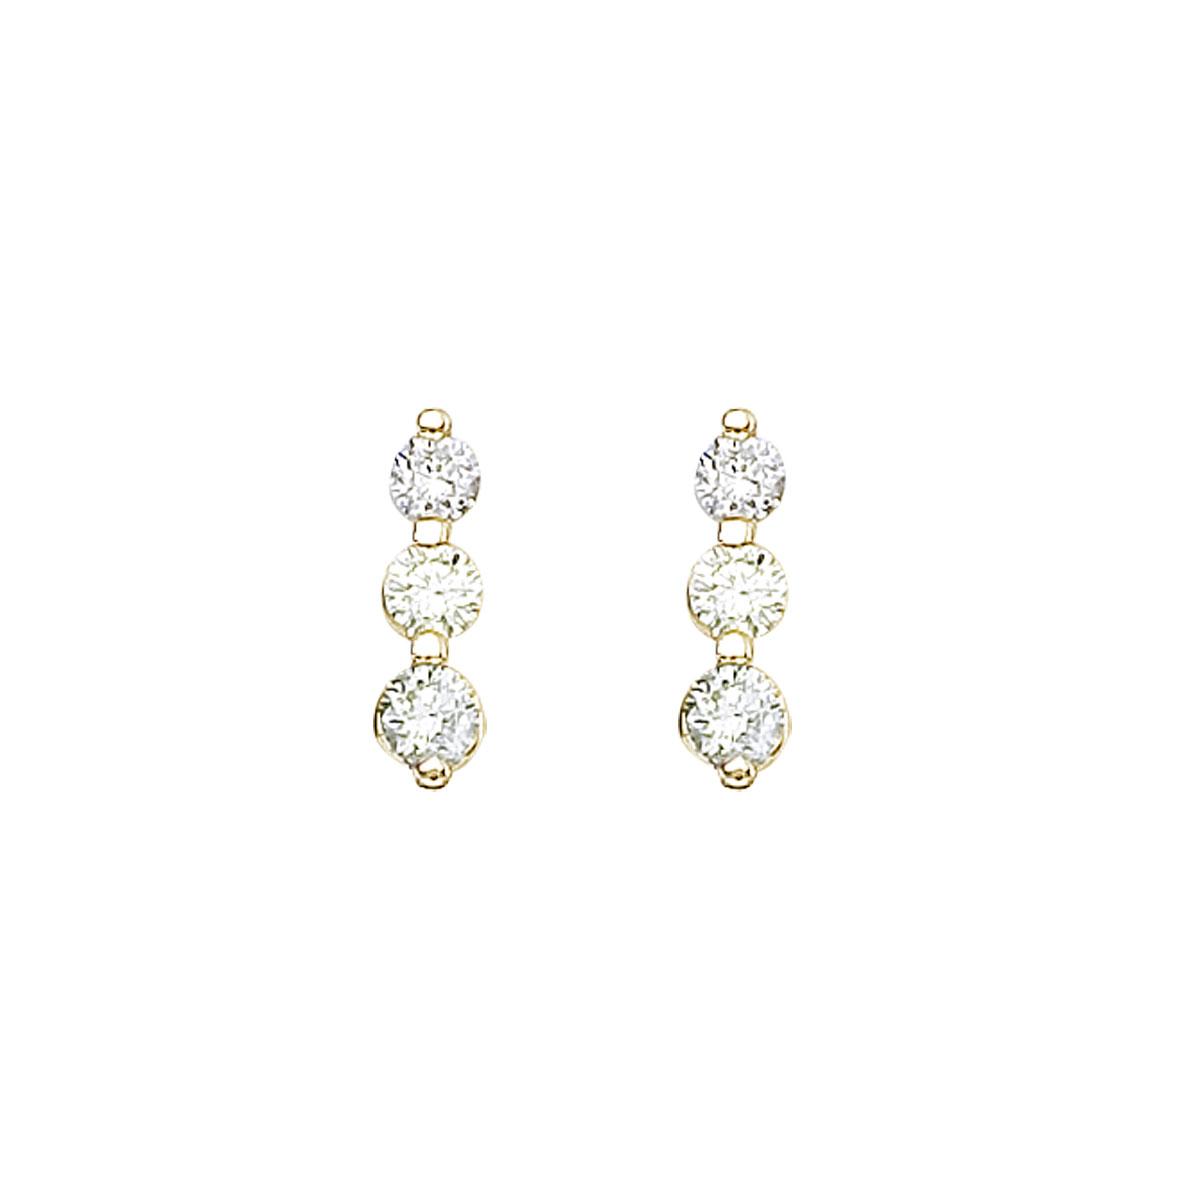 JCX2373: .50 carat three stone diamond earrings set in 14k yellow gold.